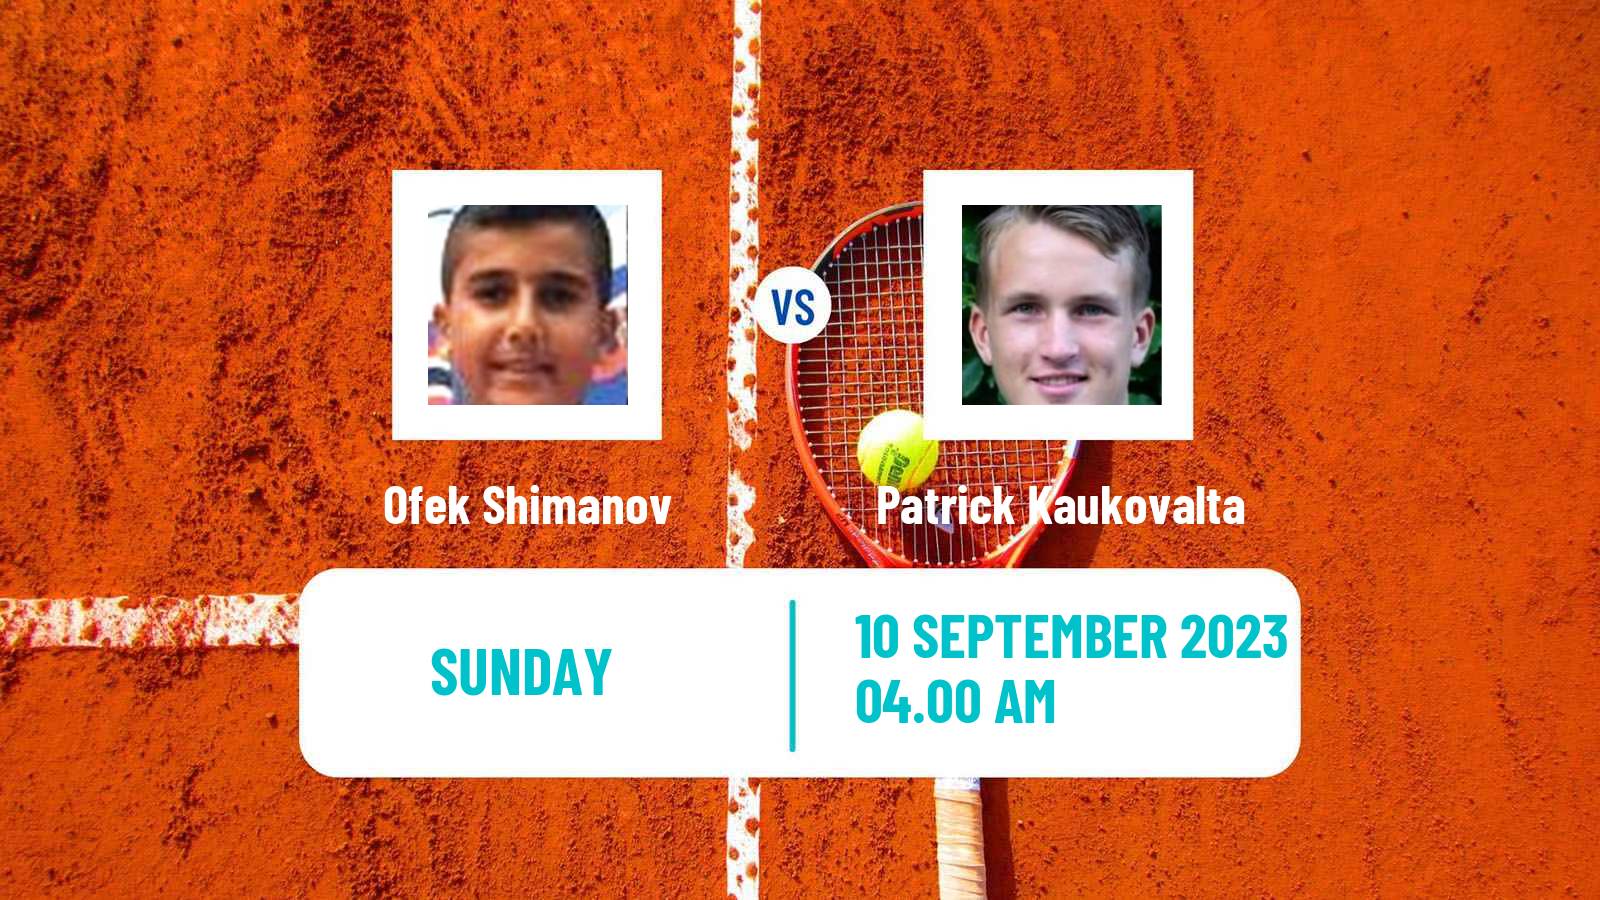 Tennis ITF M15 Budapest 2 Men Ofek Shimanov - Patrick Kaukovalta